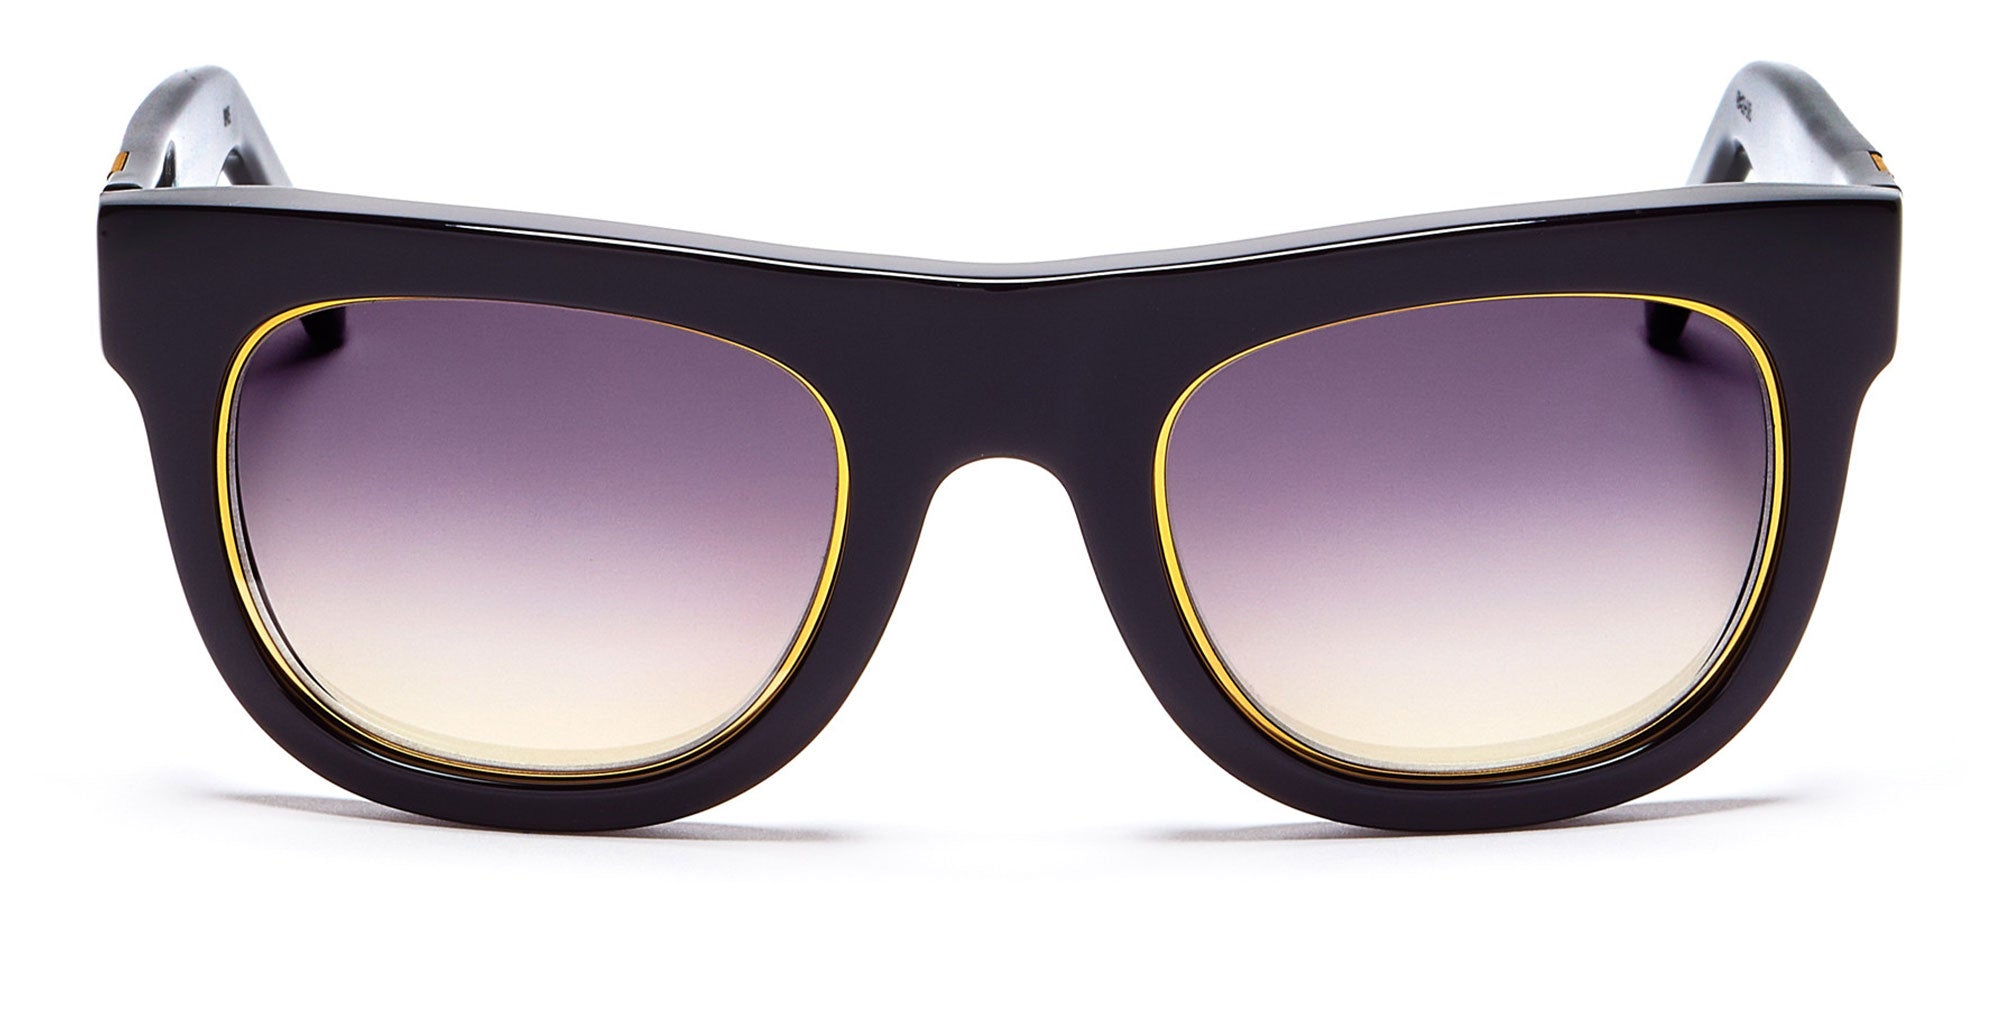 01|Handmade Sunglasses by Westward Leaning